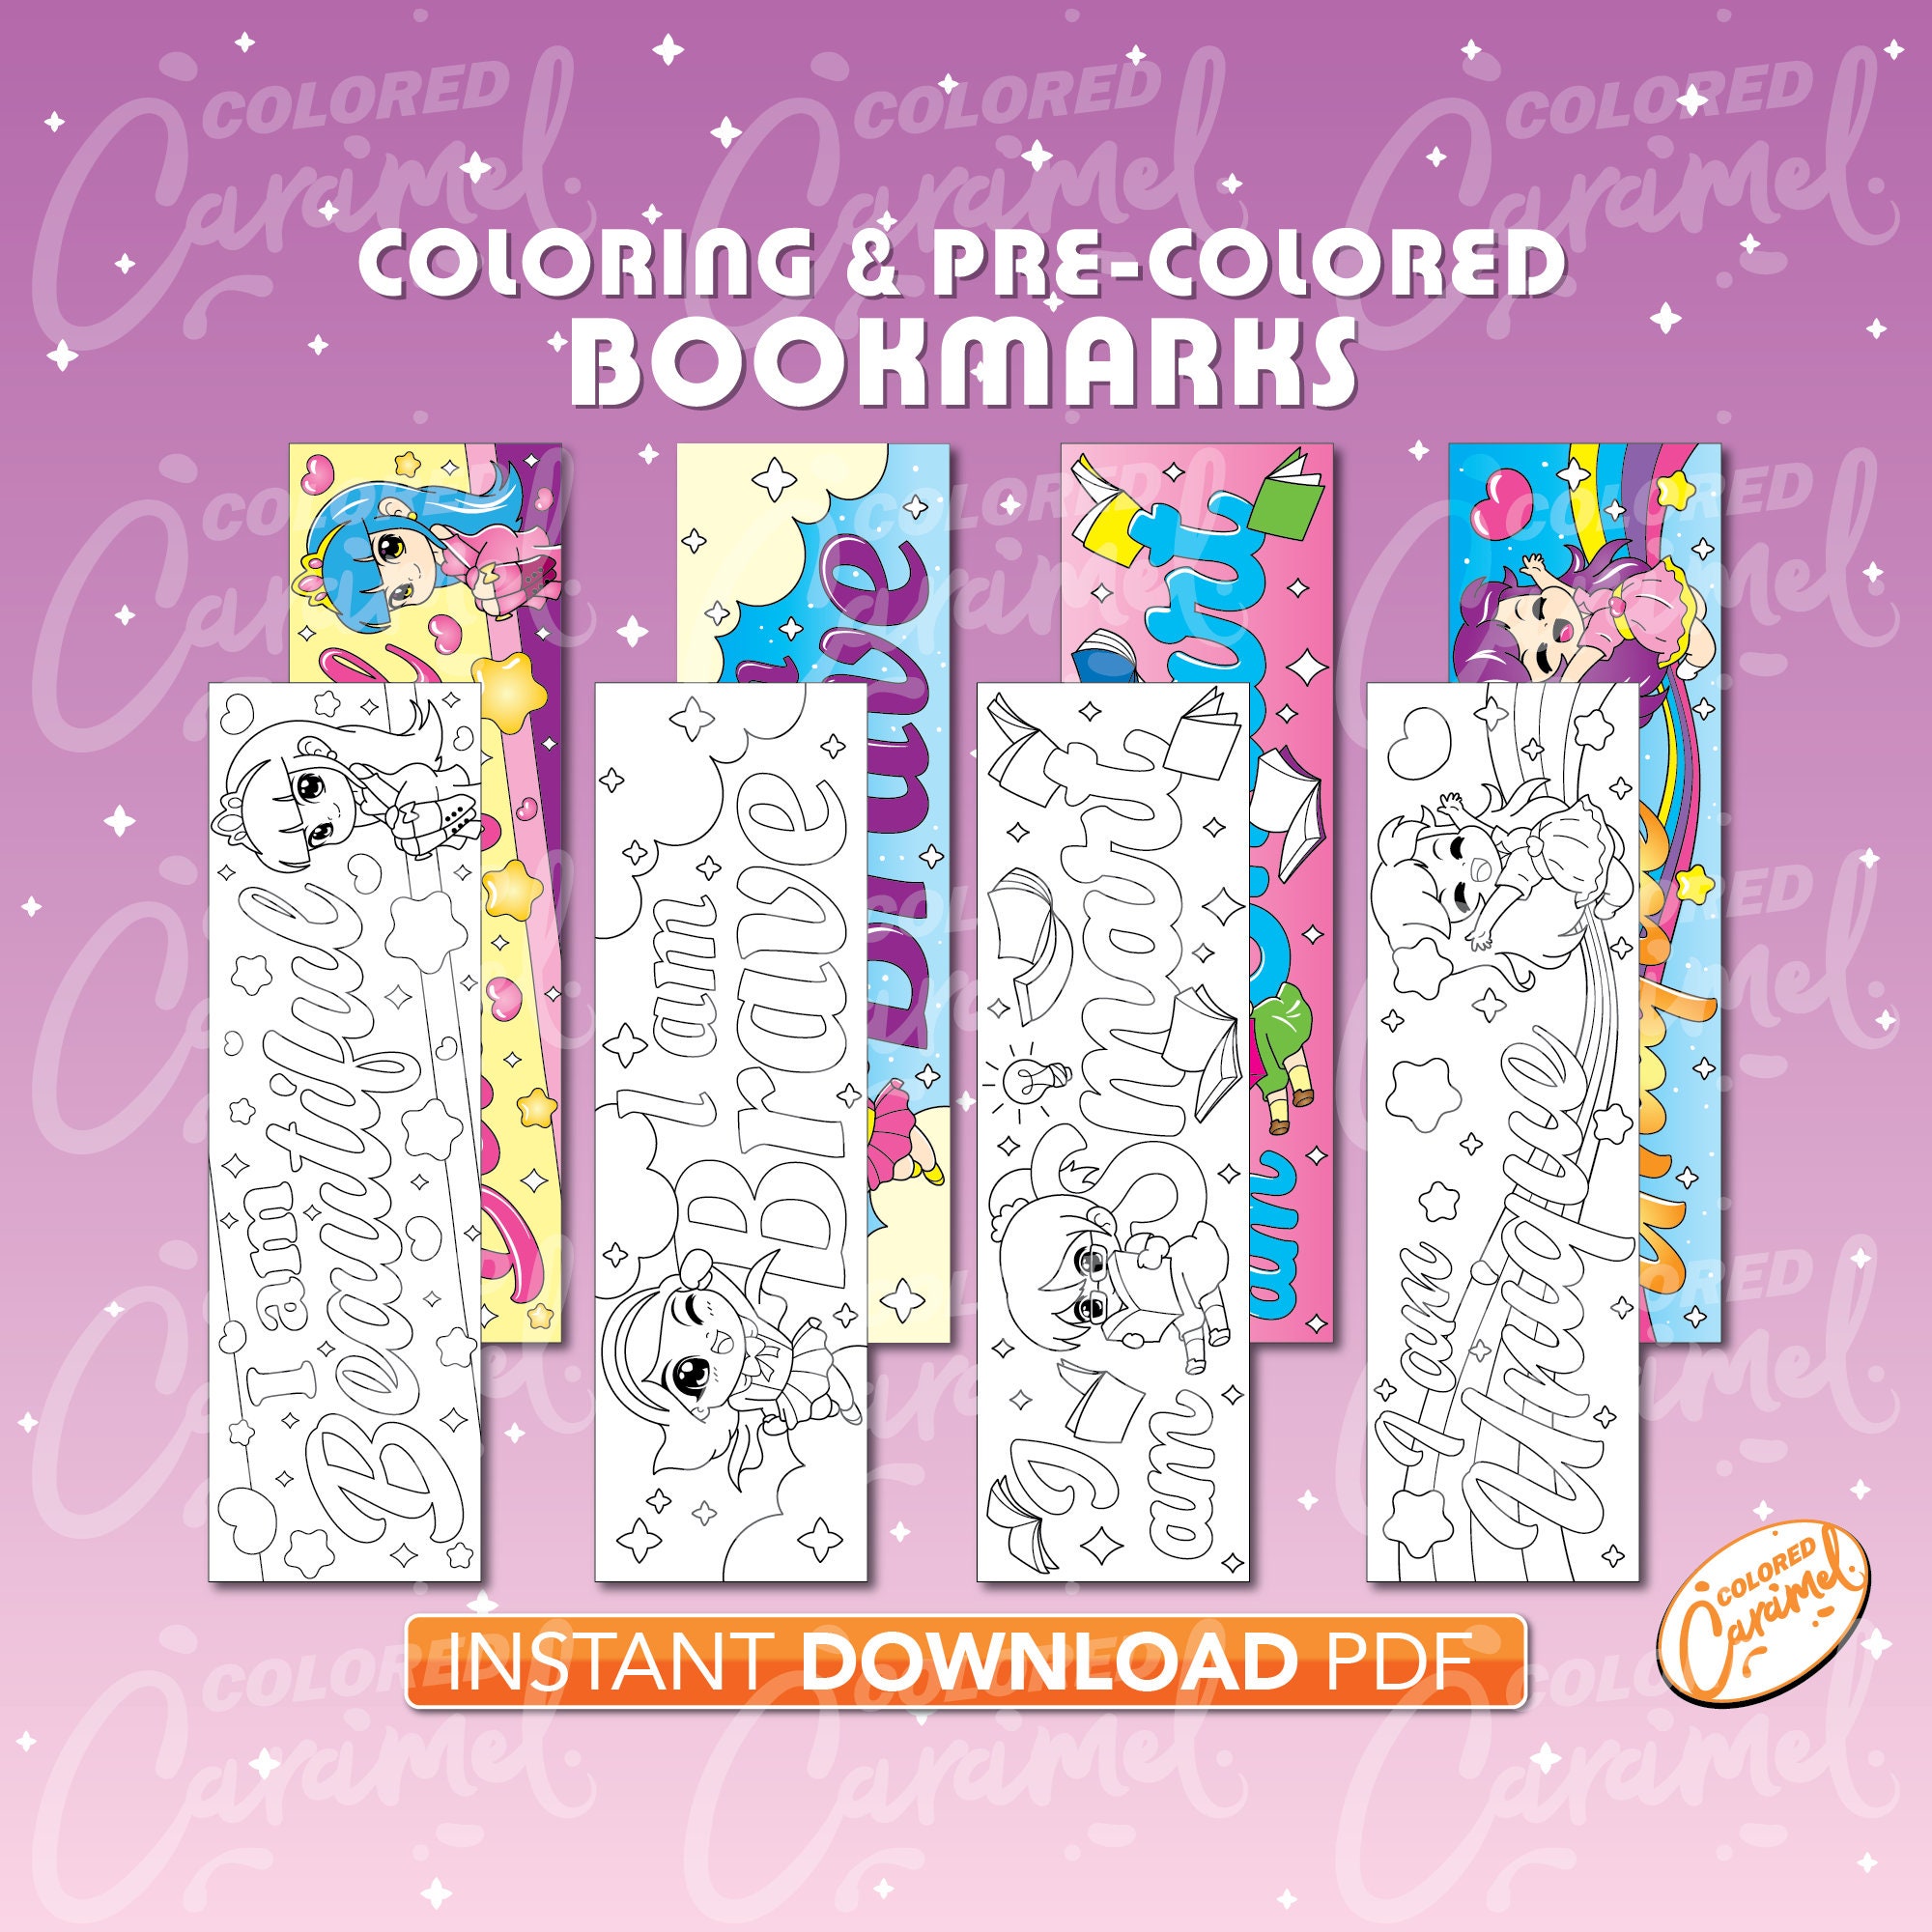 Kawaii Chibi Girls Coloring Bookmarks, Printables Instant Digital Download PDF, Set of Colorable, Colorful DIY Make Your Own Book Marker